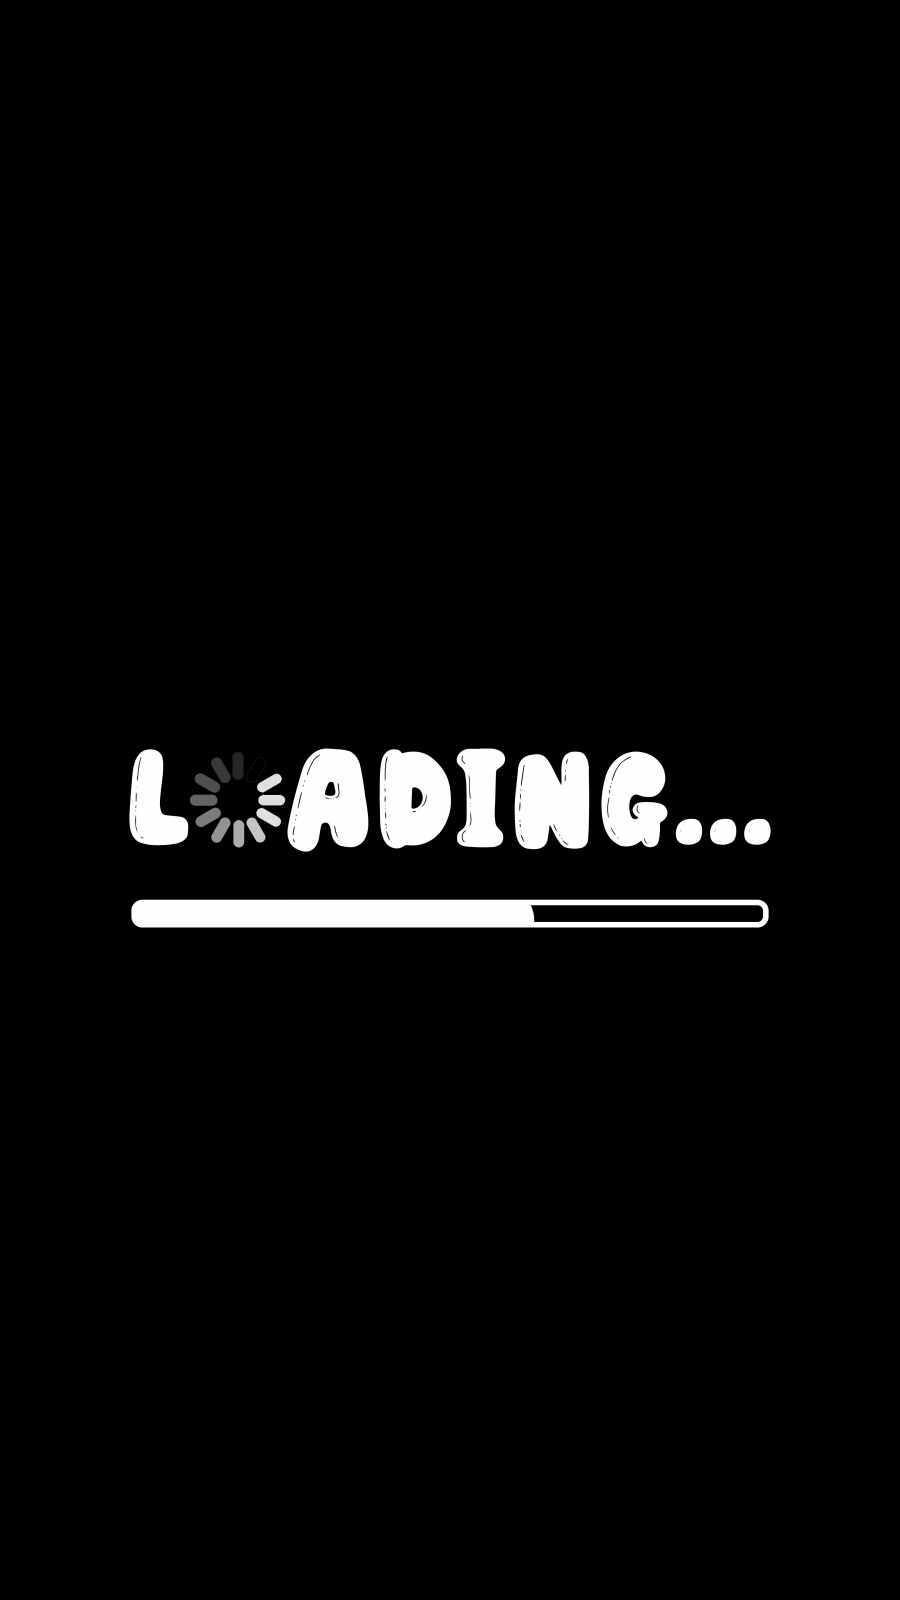 Loading